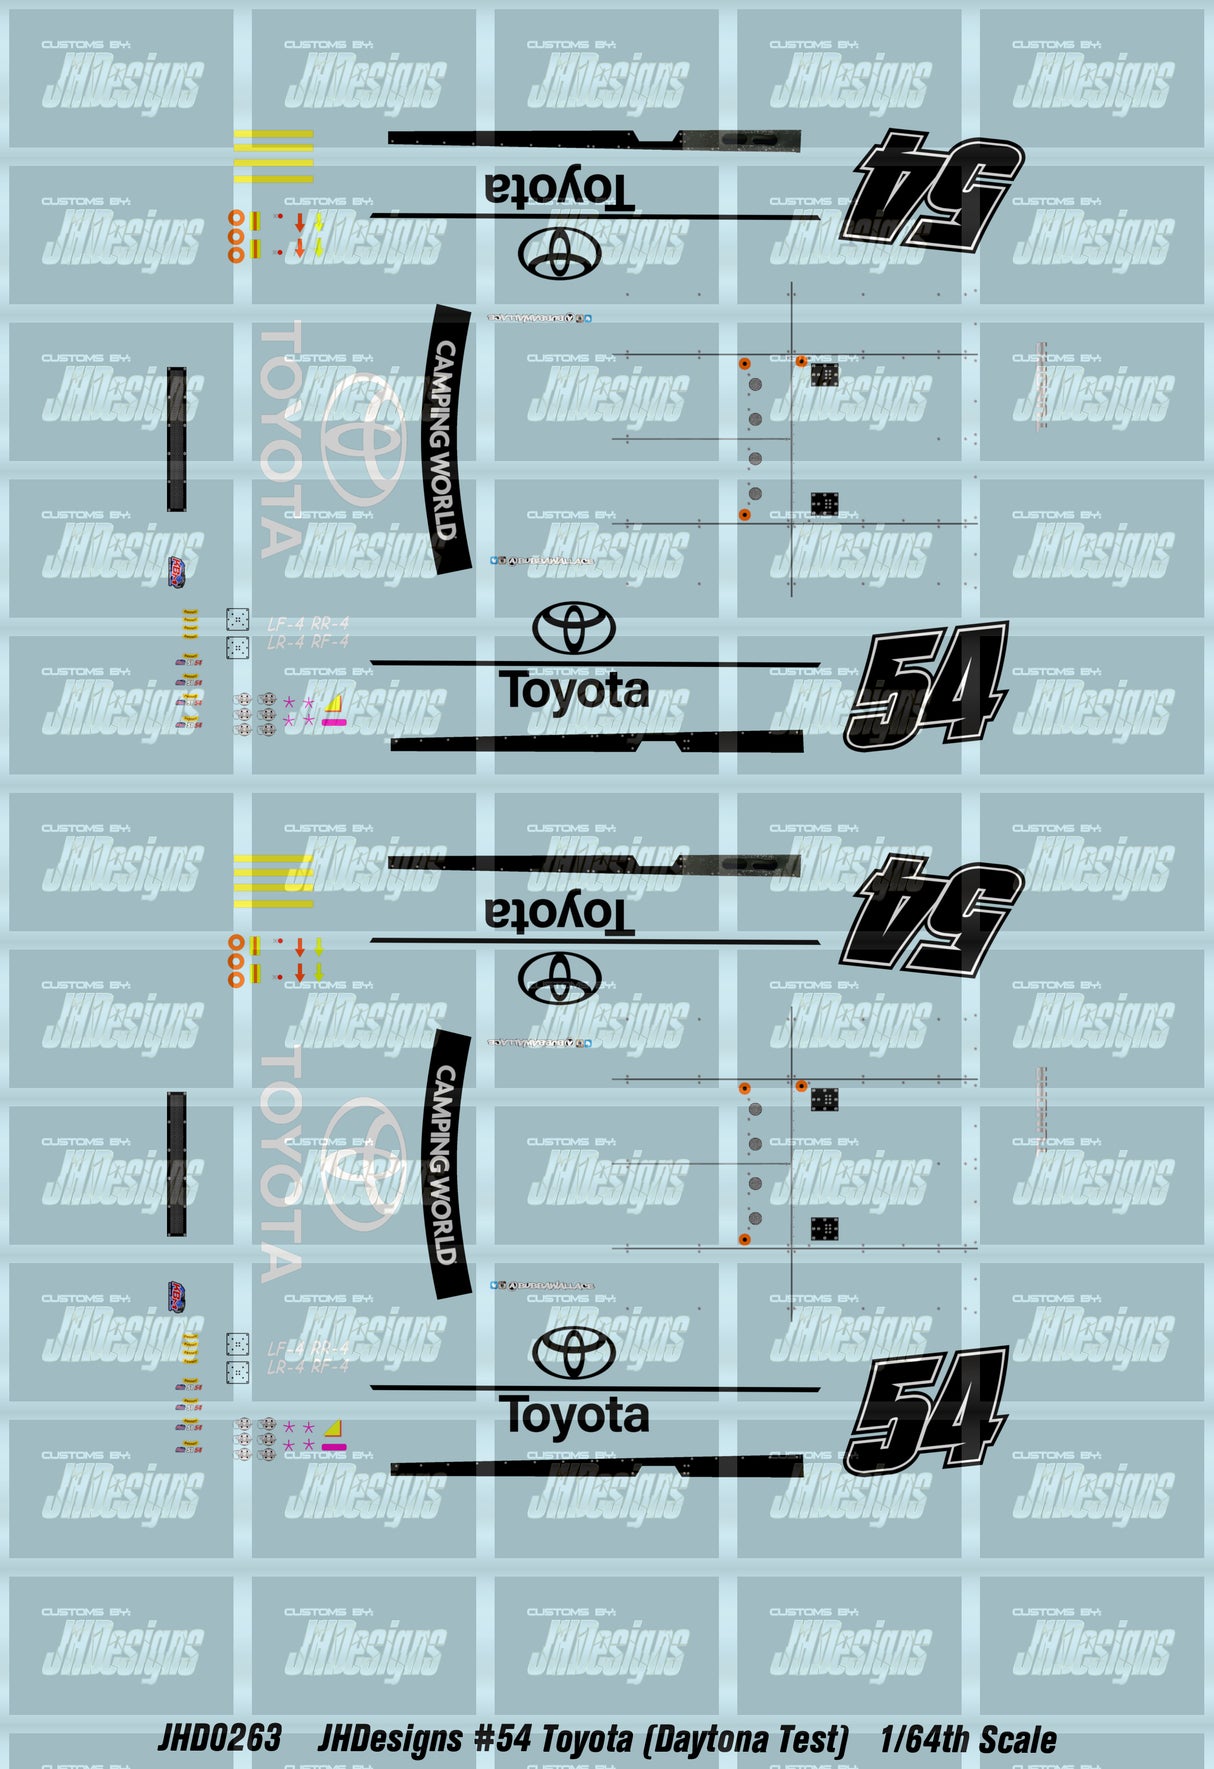 JH Designs Bubba Wallace 2014 CWTS #54 Toyota (Daytona Test) 1:64 Racecar Decal Set